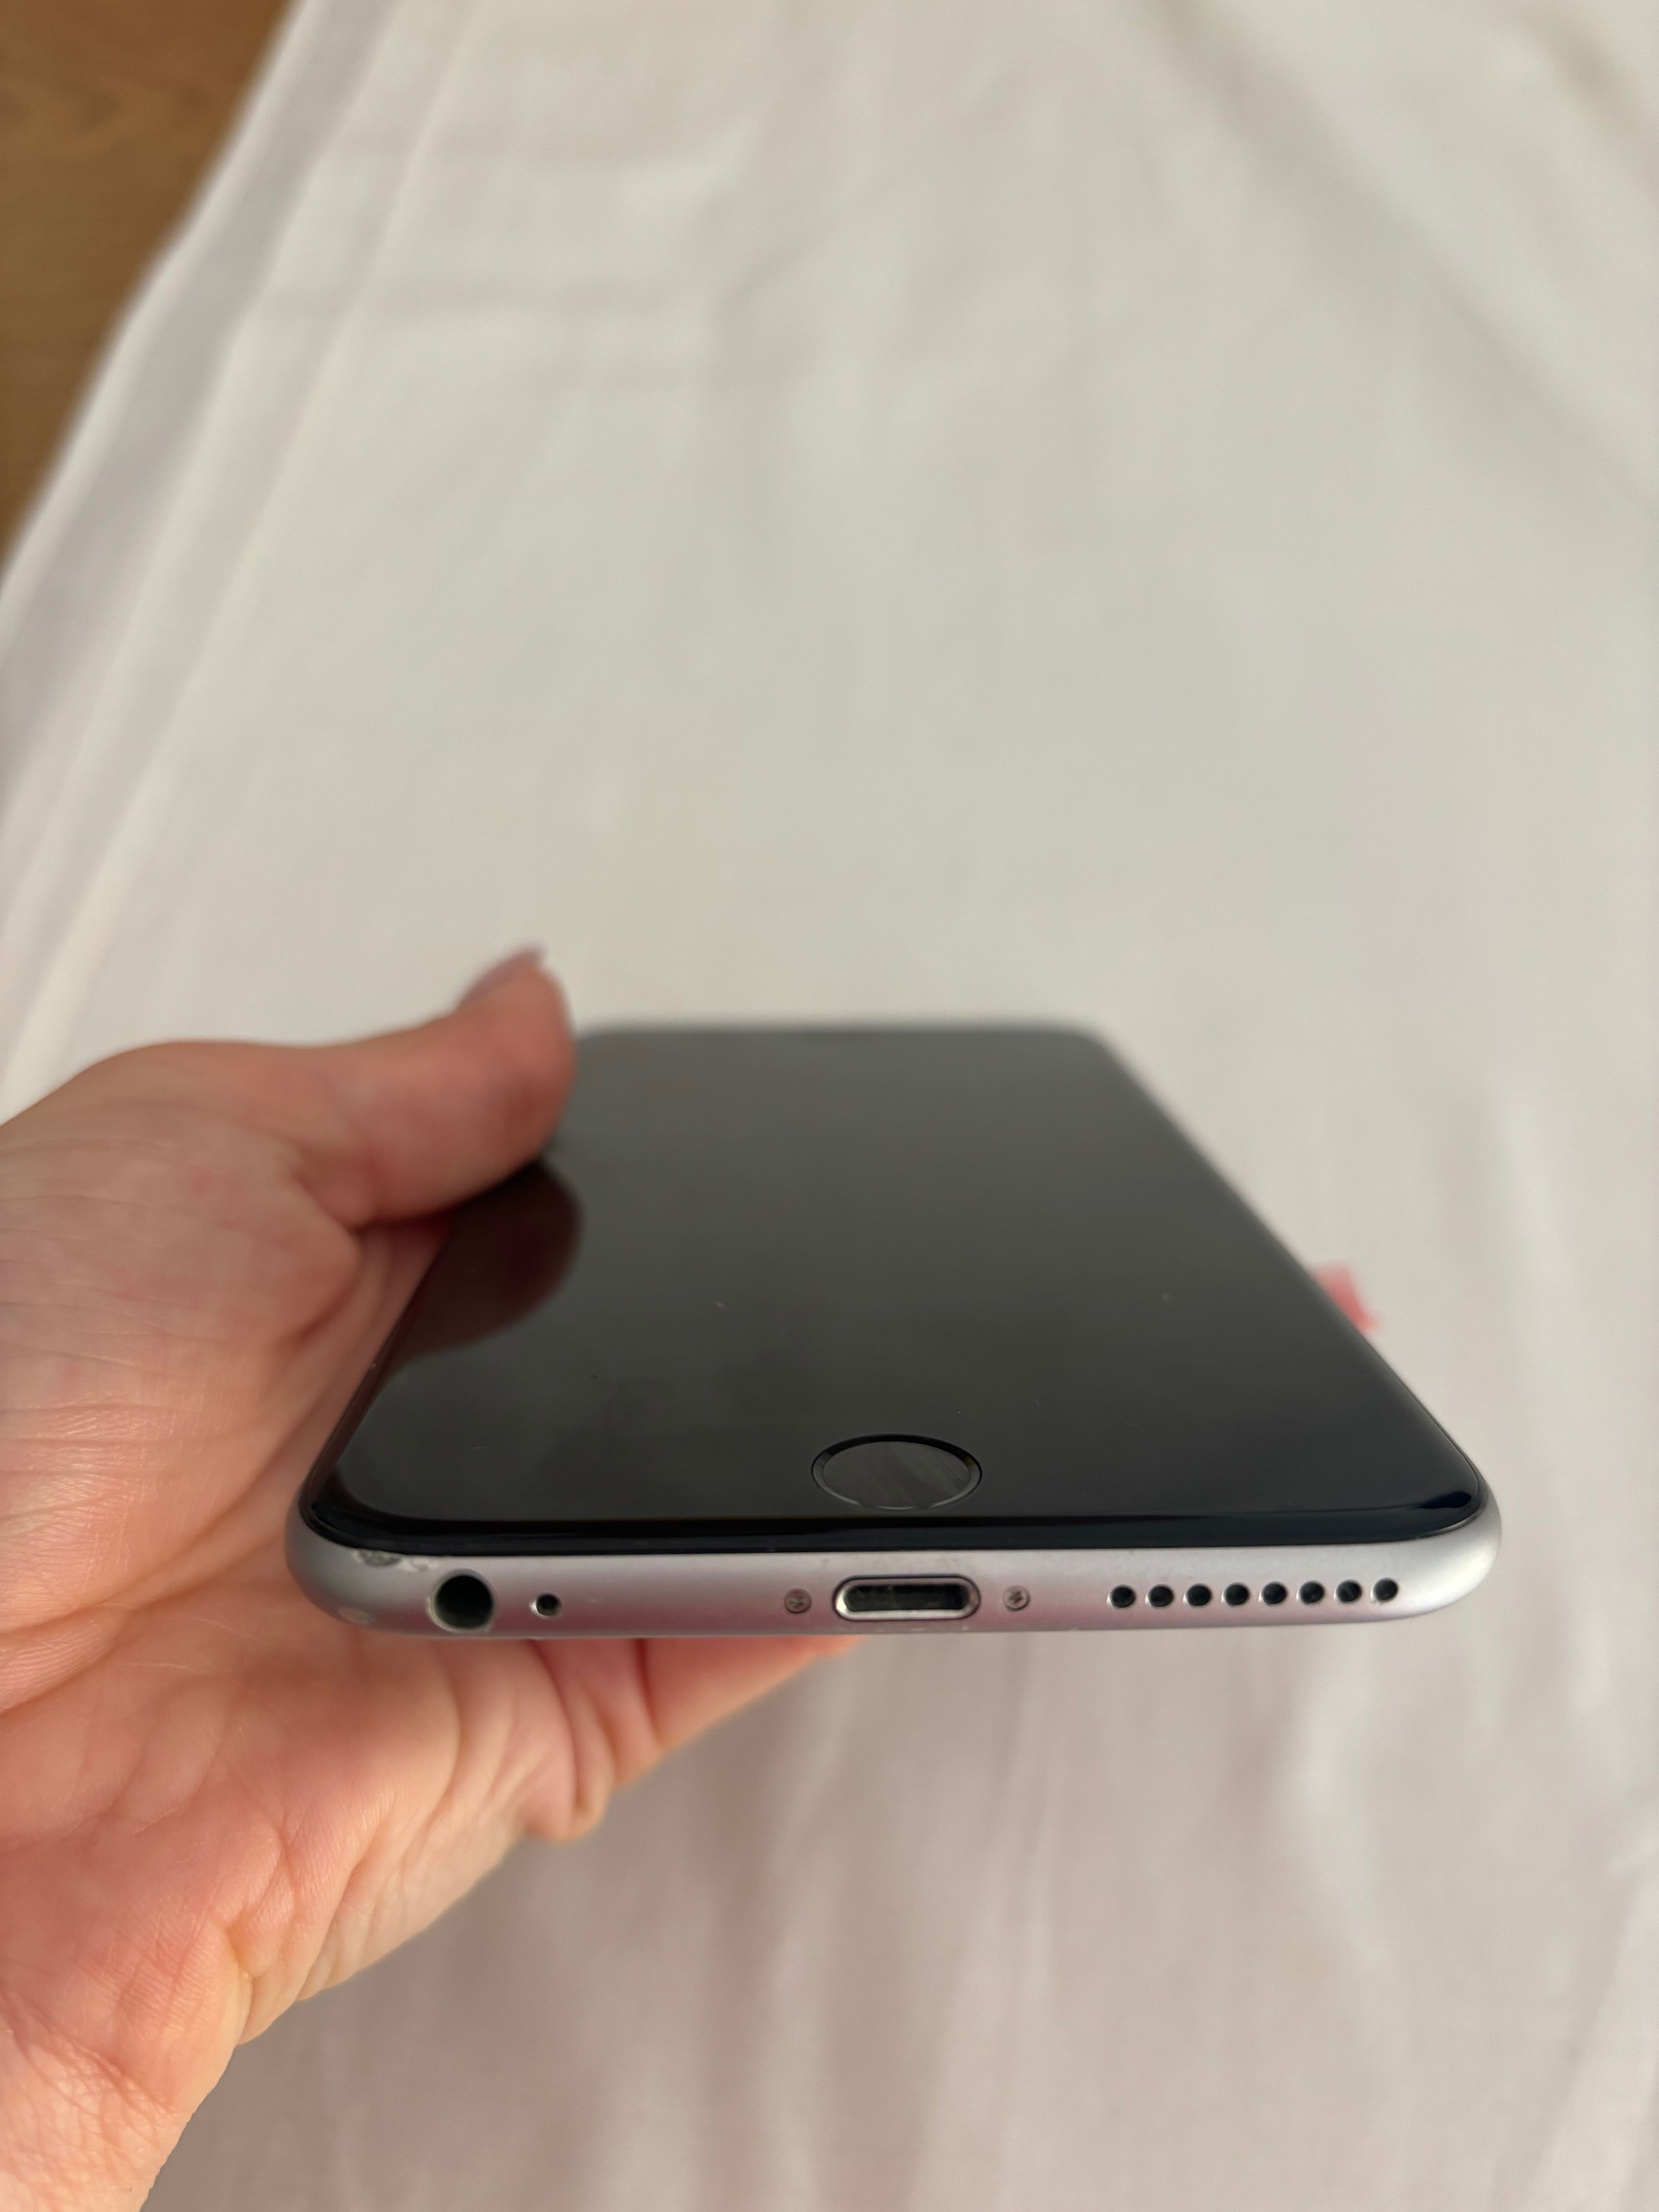 iPhone 6 plus 64gb space gray